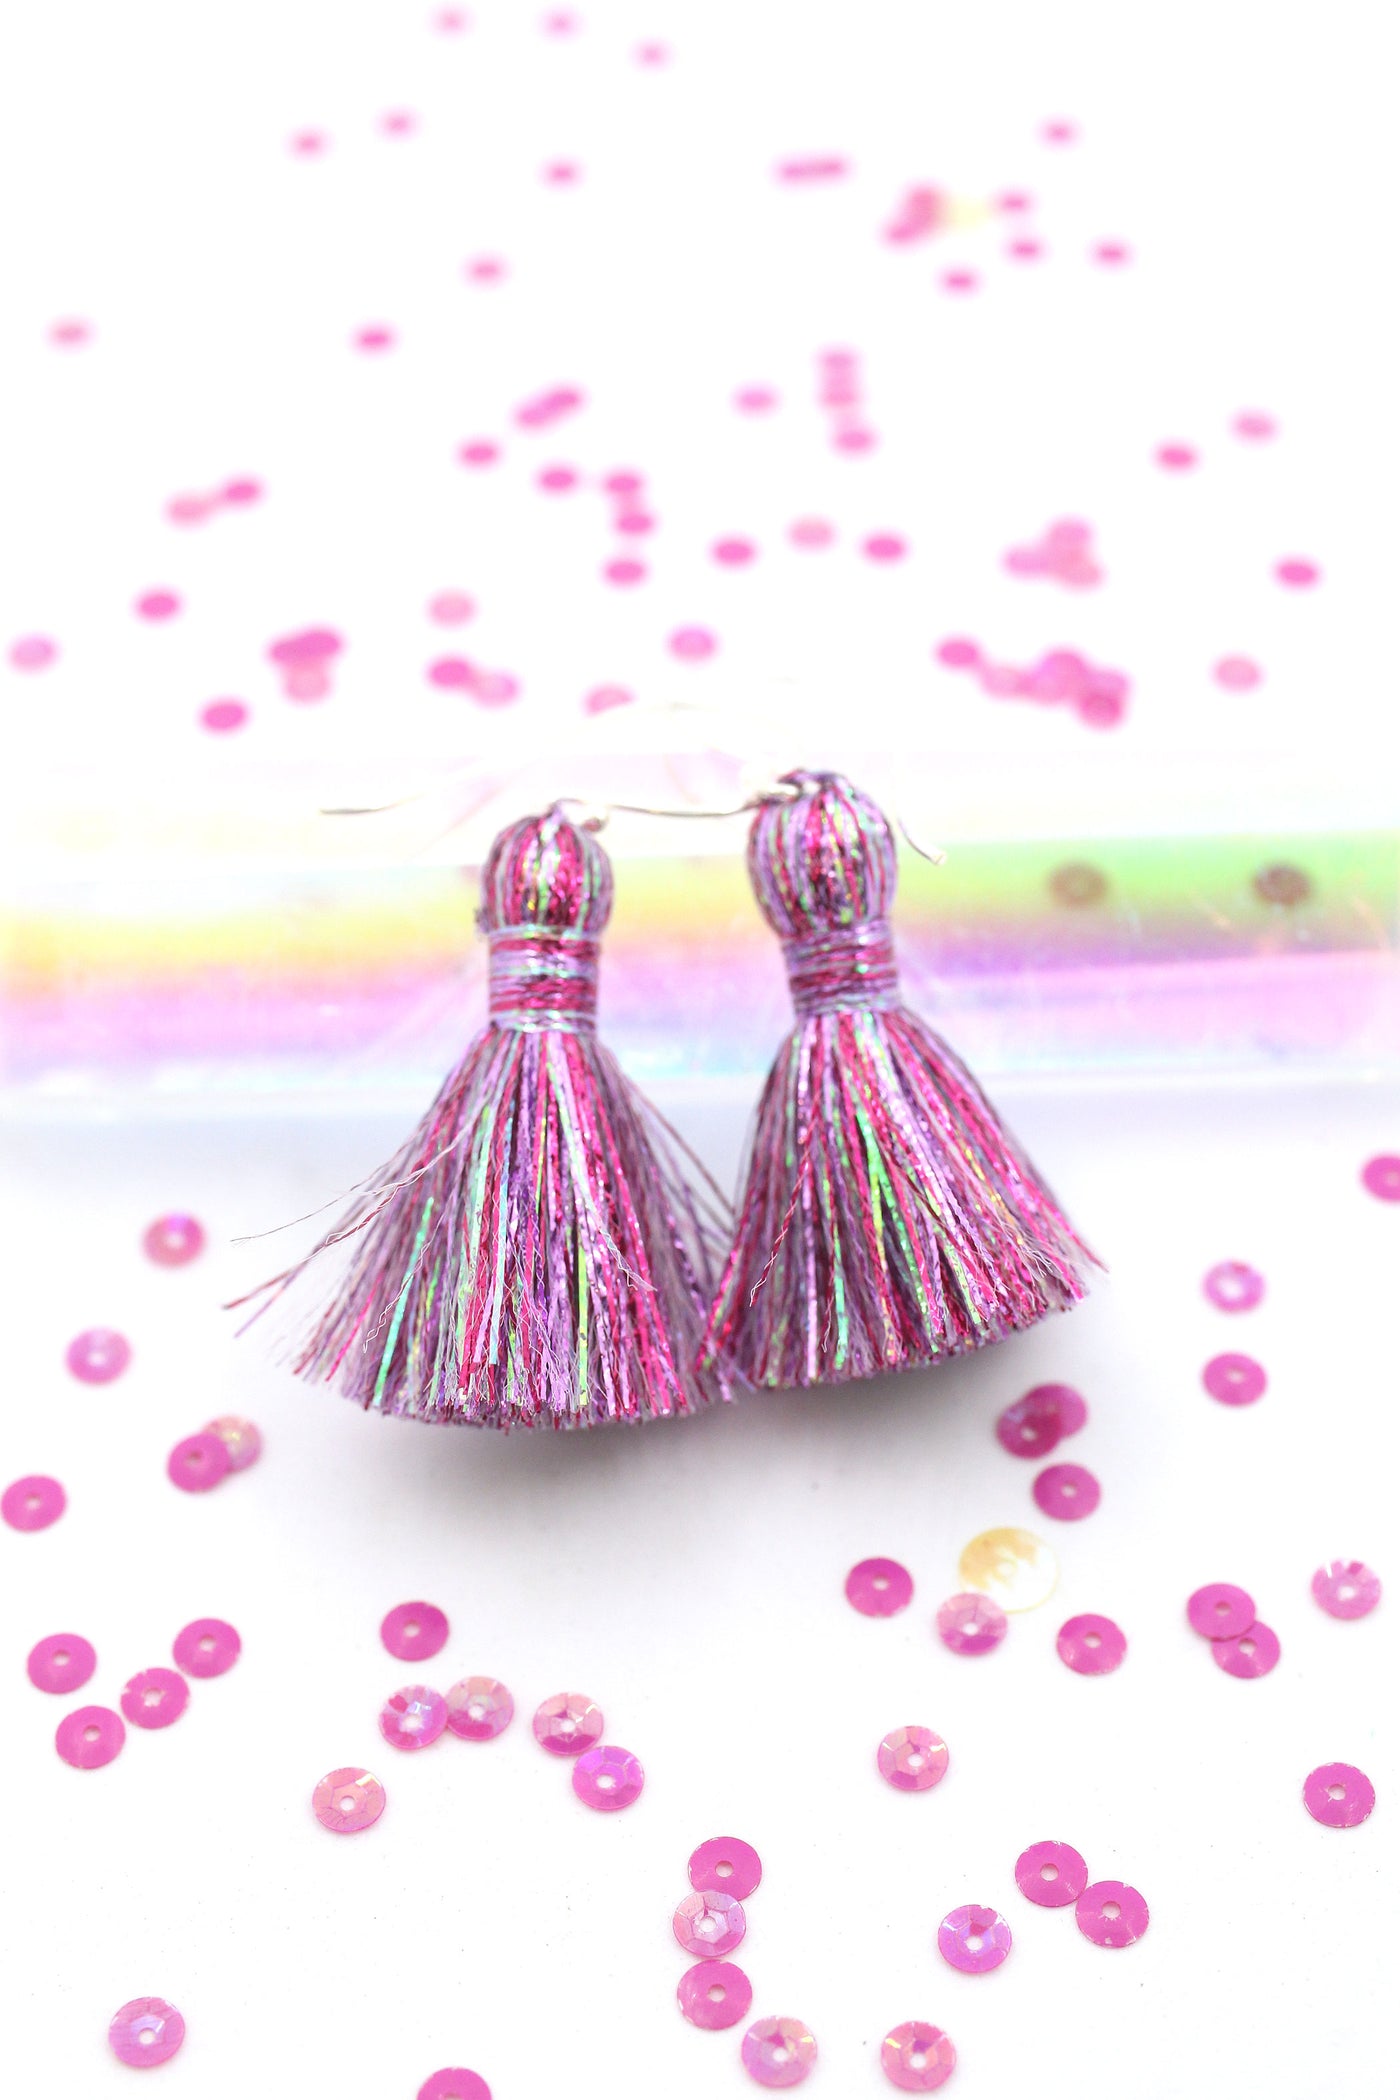 Colorful Metallic Tassels: 1.25" Handmade Tassels for Making Earrings/Jewelry